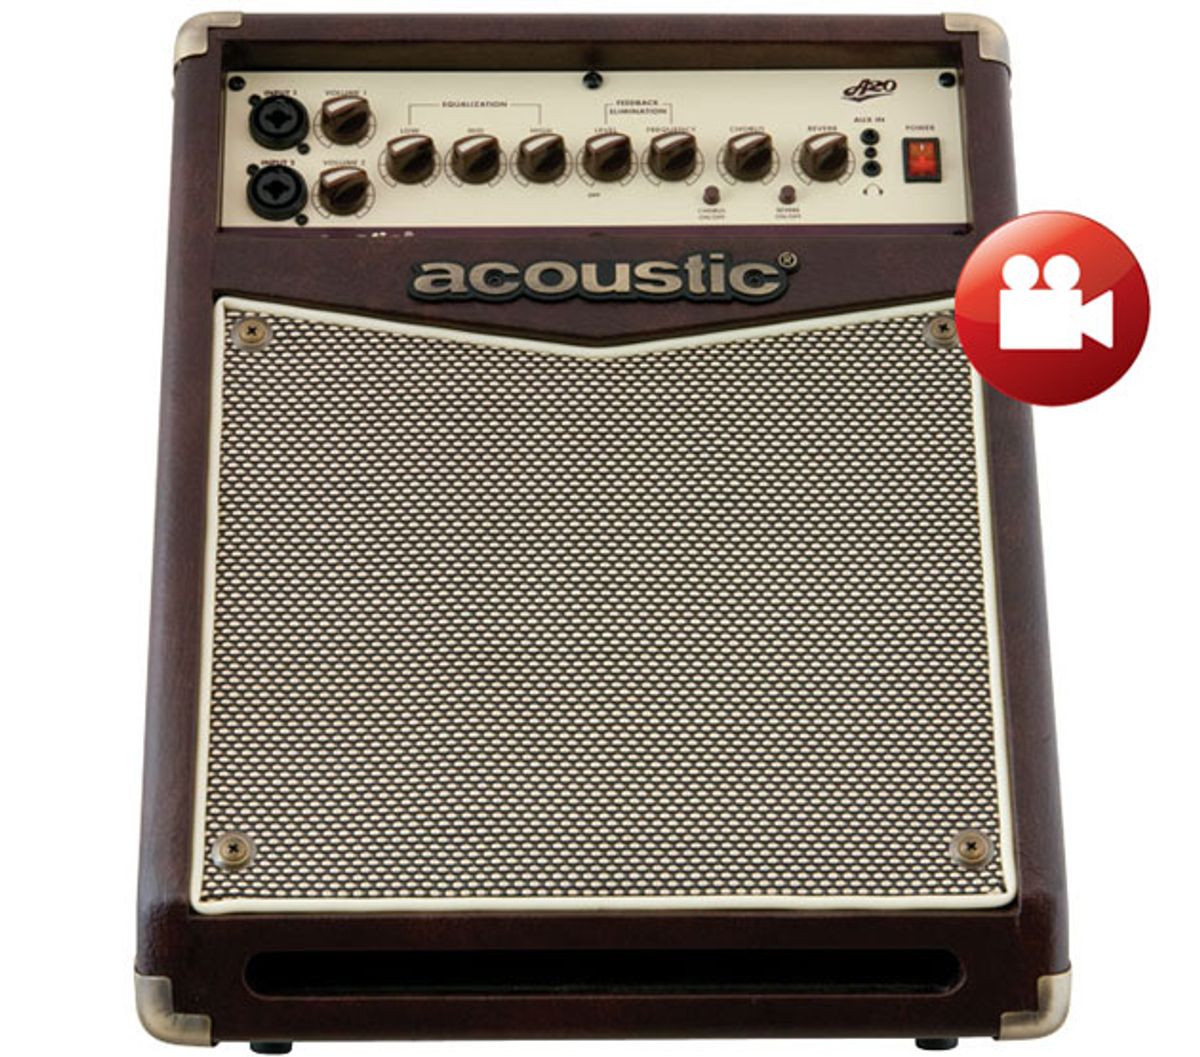 Acoustic A20 Review